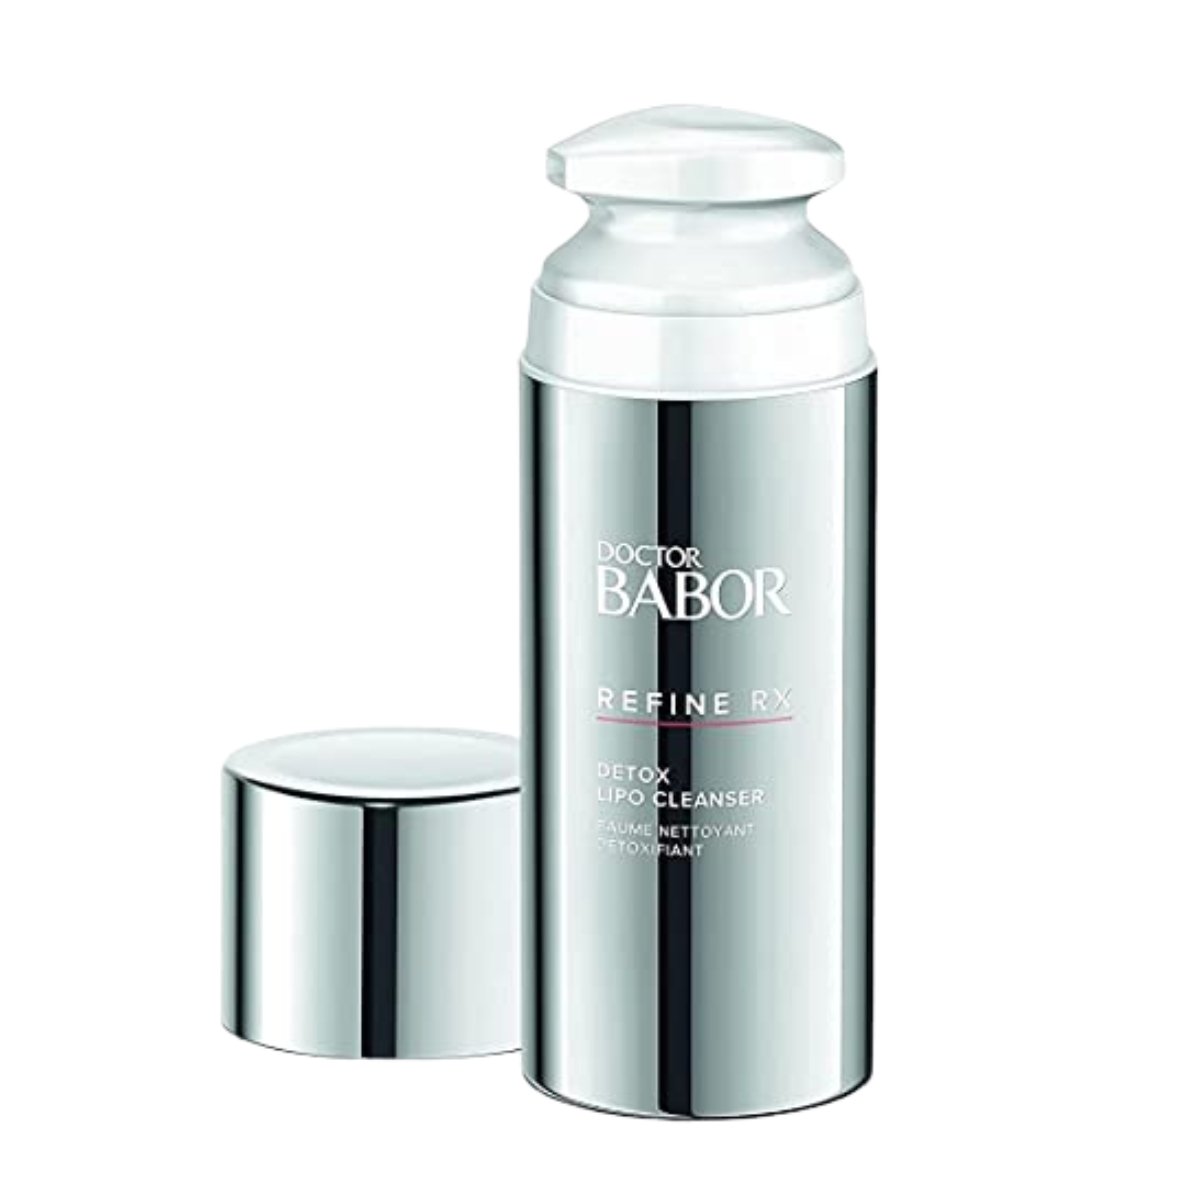 Babor - Refine RX Detox Lipo Cleanser 100ml - SkincareEssentials